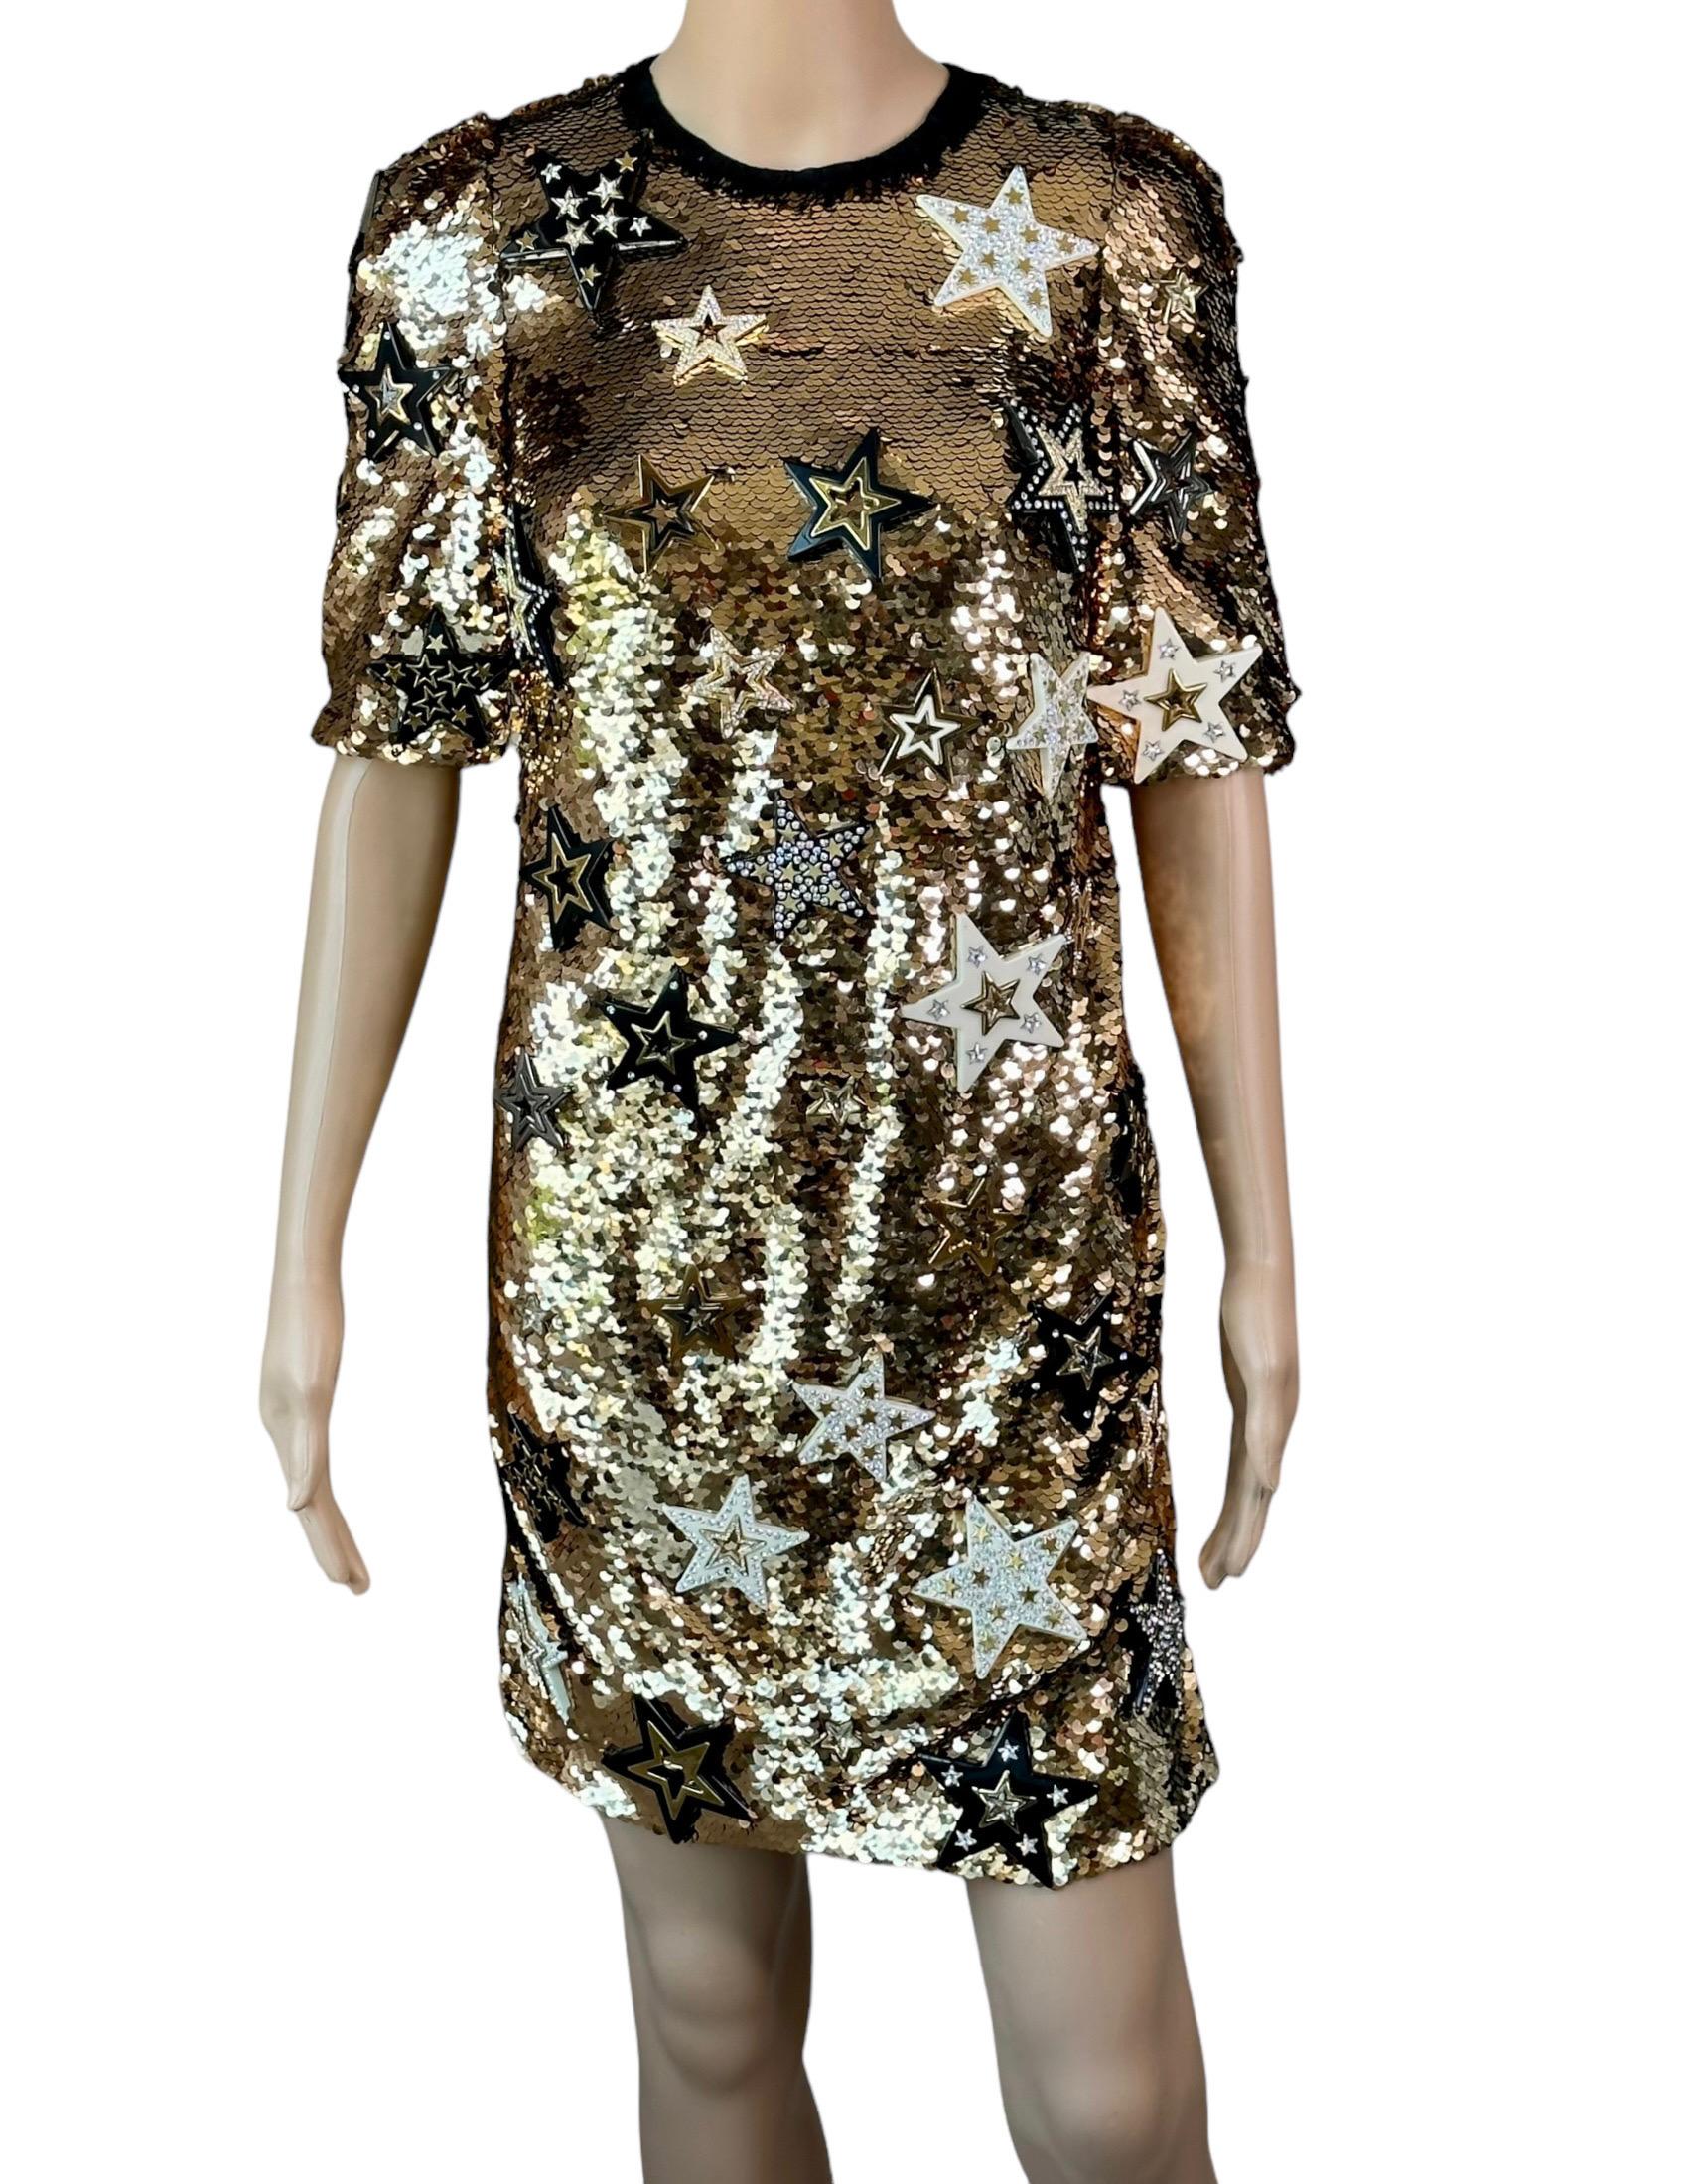 Dolce & Gabbana F/W 2011 Runway Unworn Embellished Star Sequined Gold Mini Dress For Sale 4